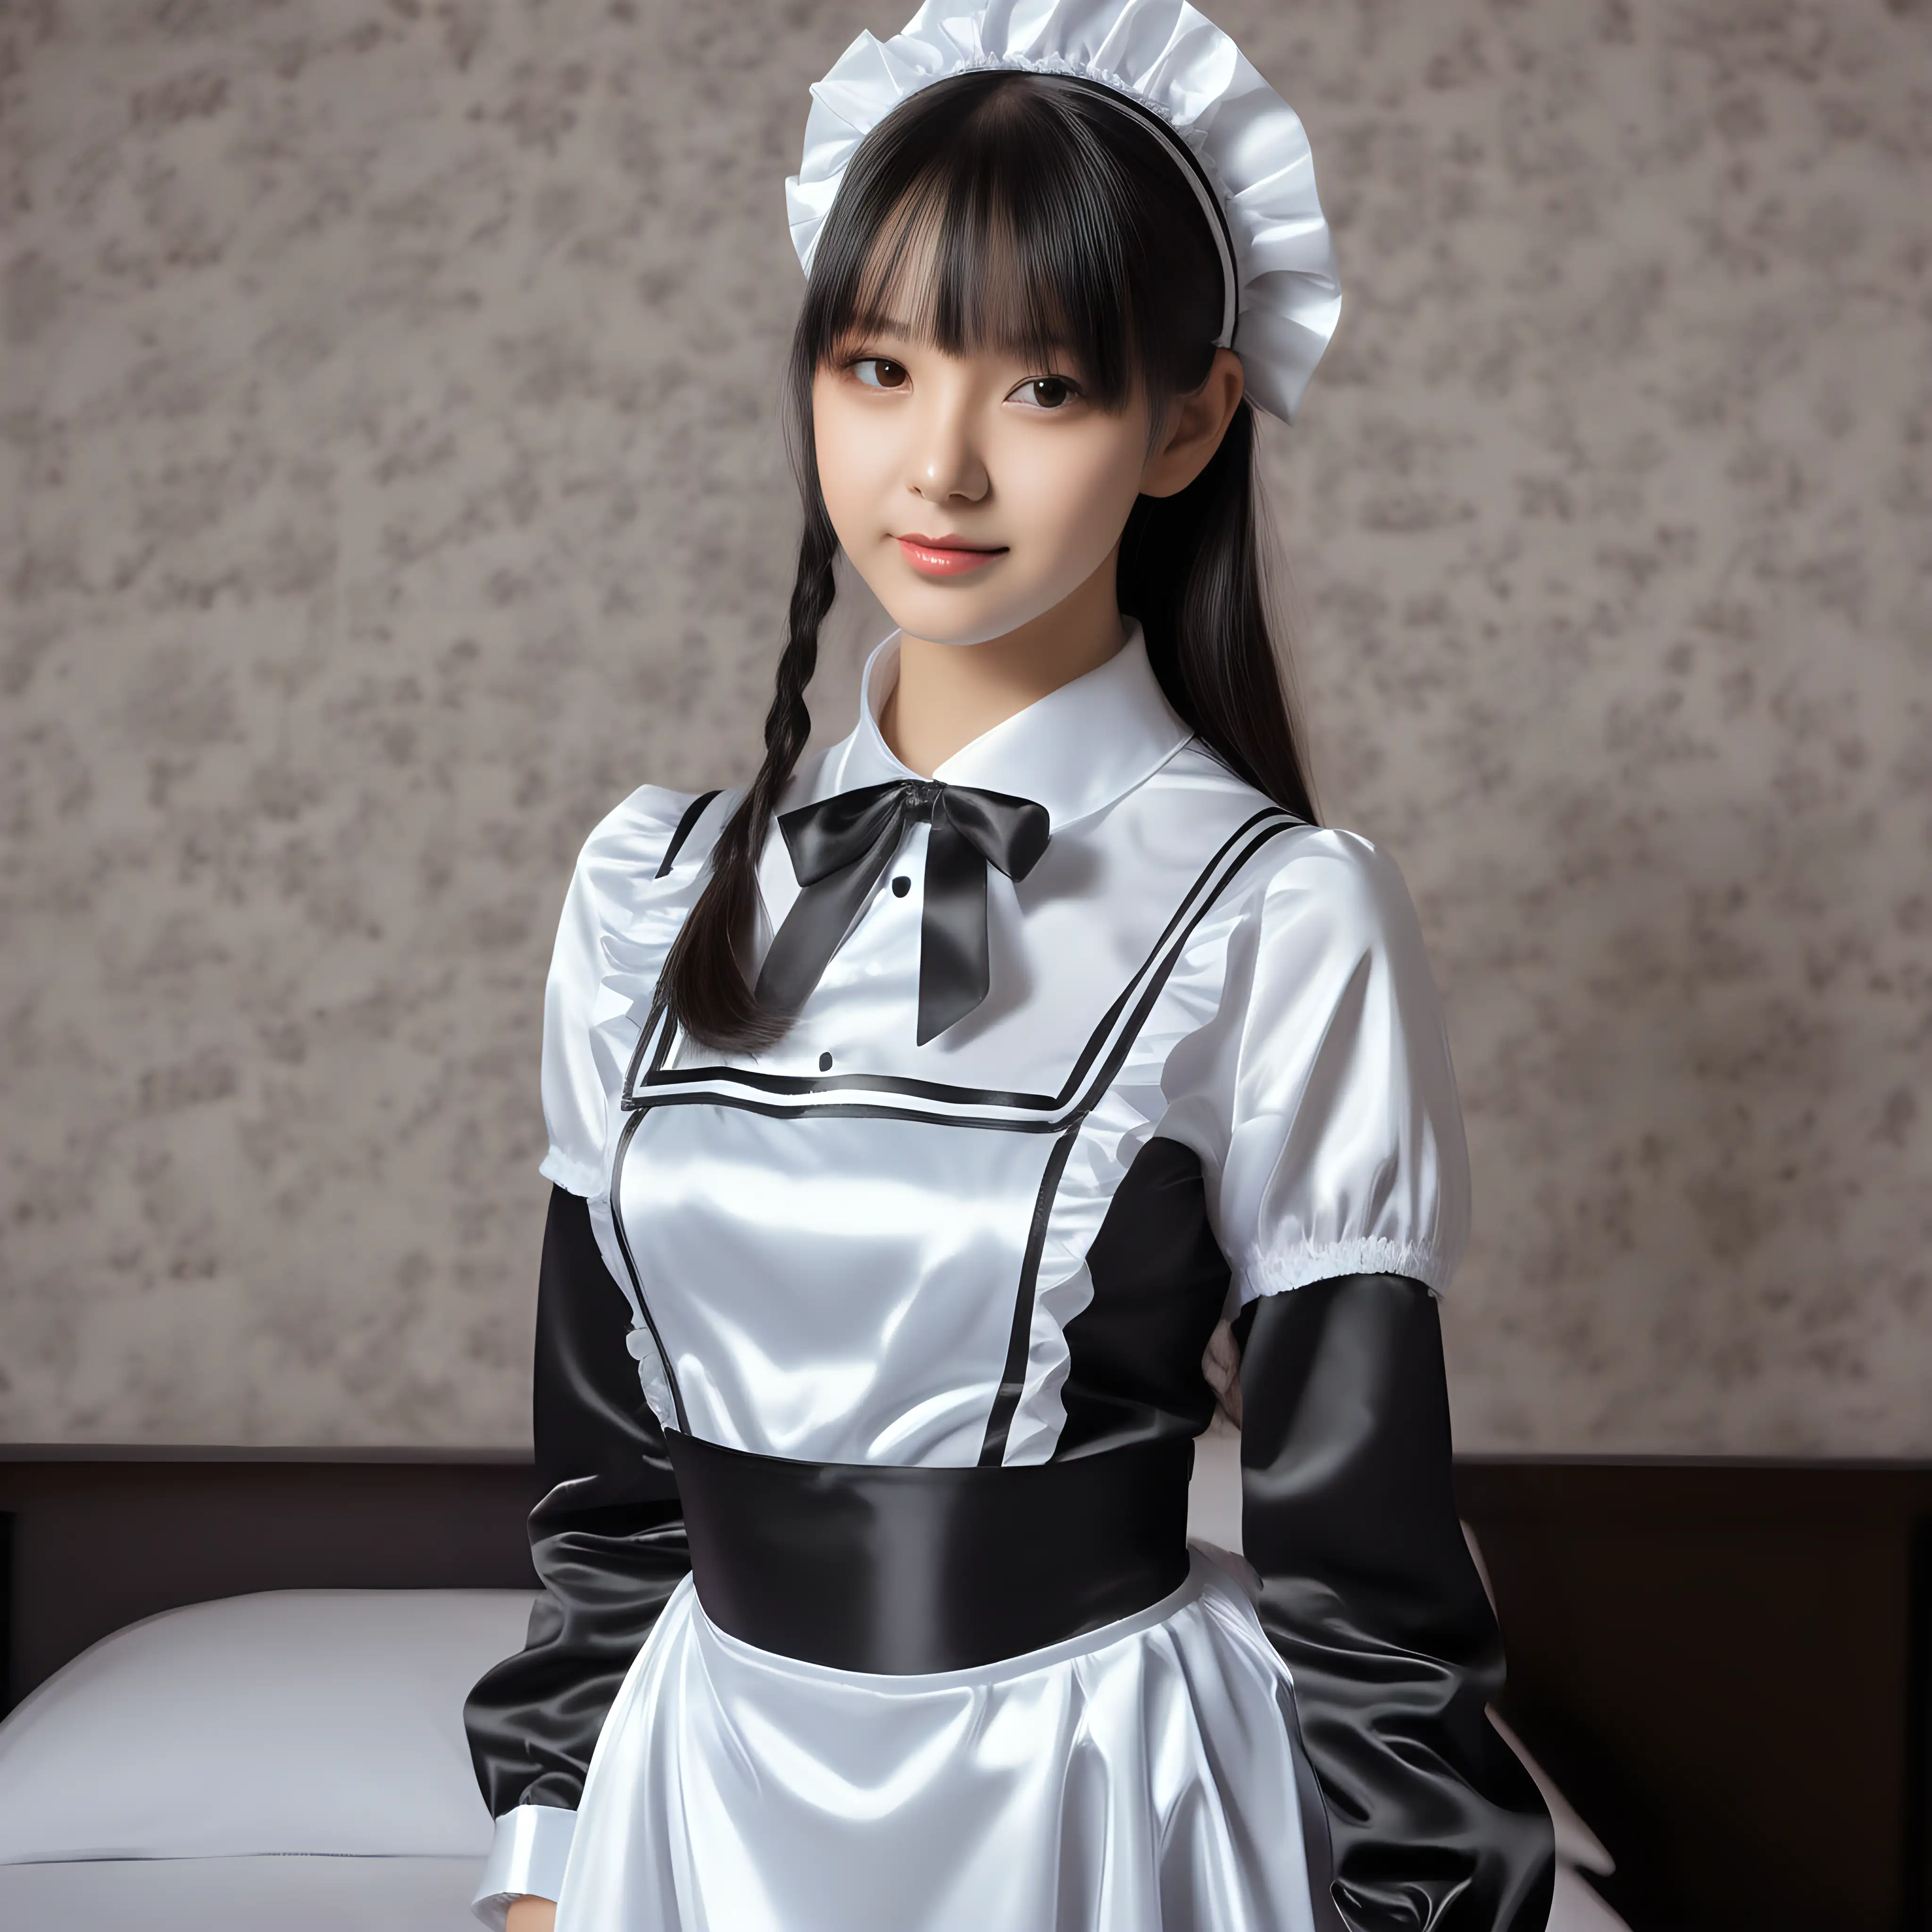 Elegant Maid in Satin Uniform Graceful Girl in Luxurious Attire